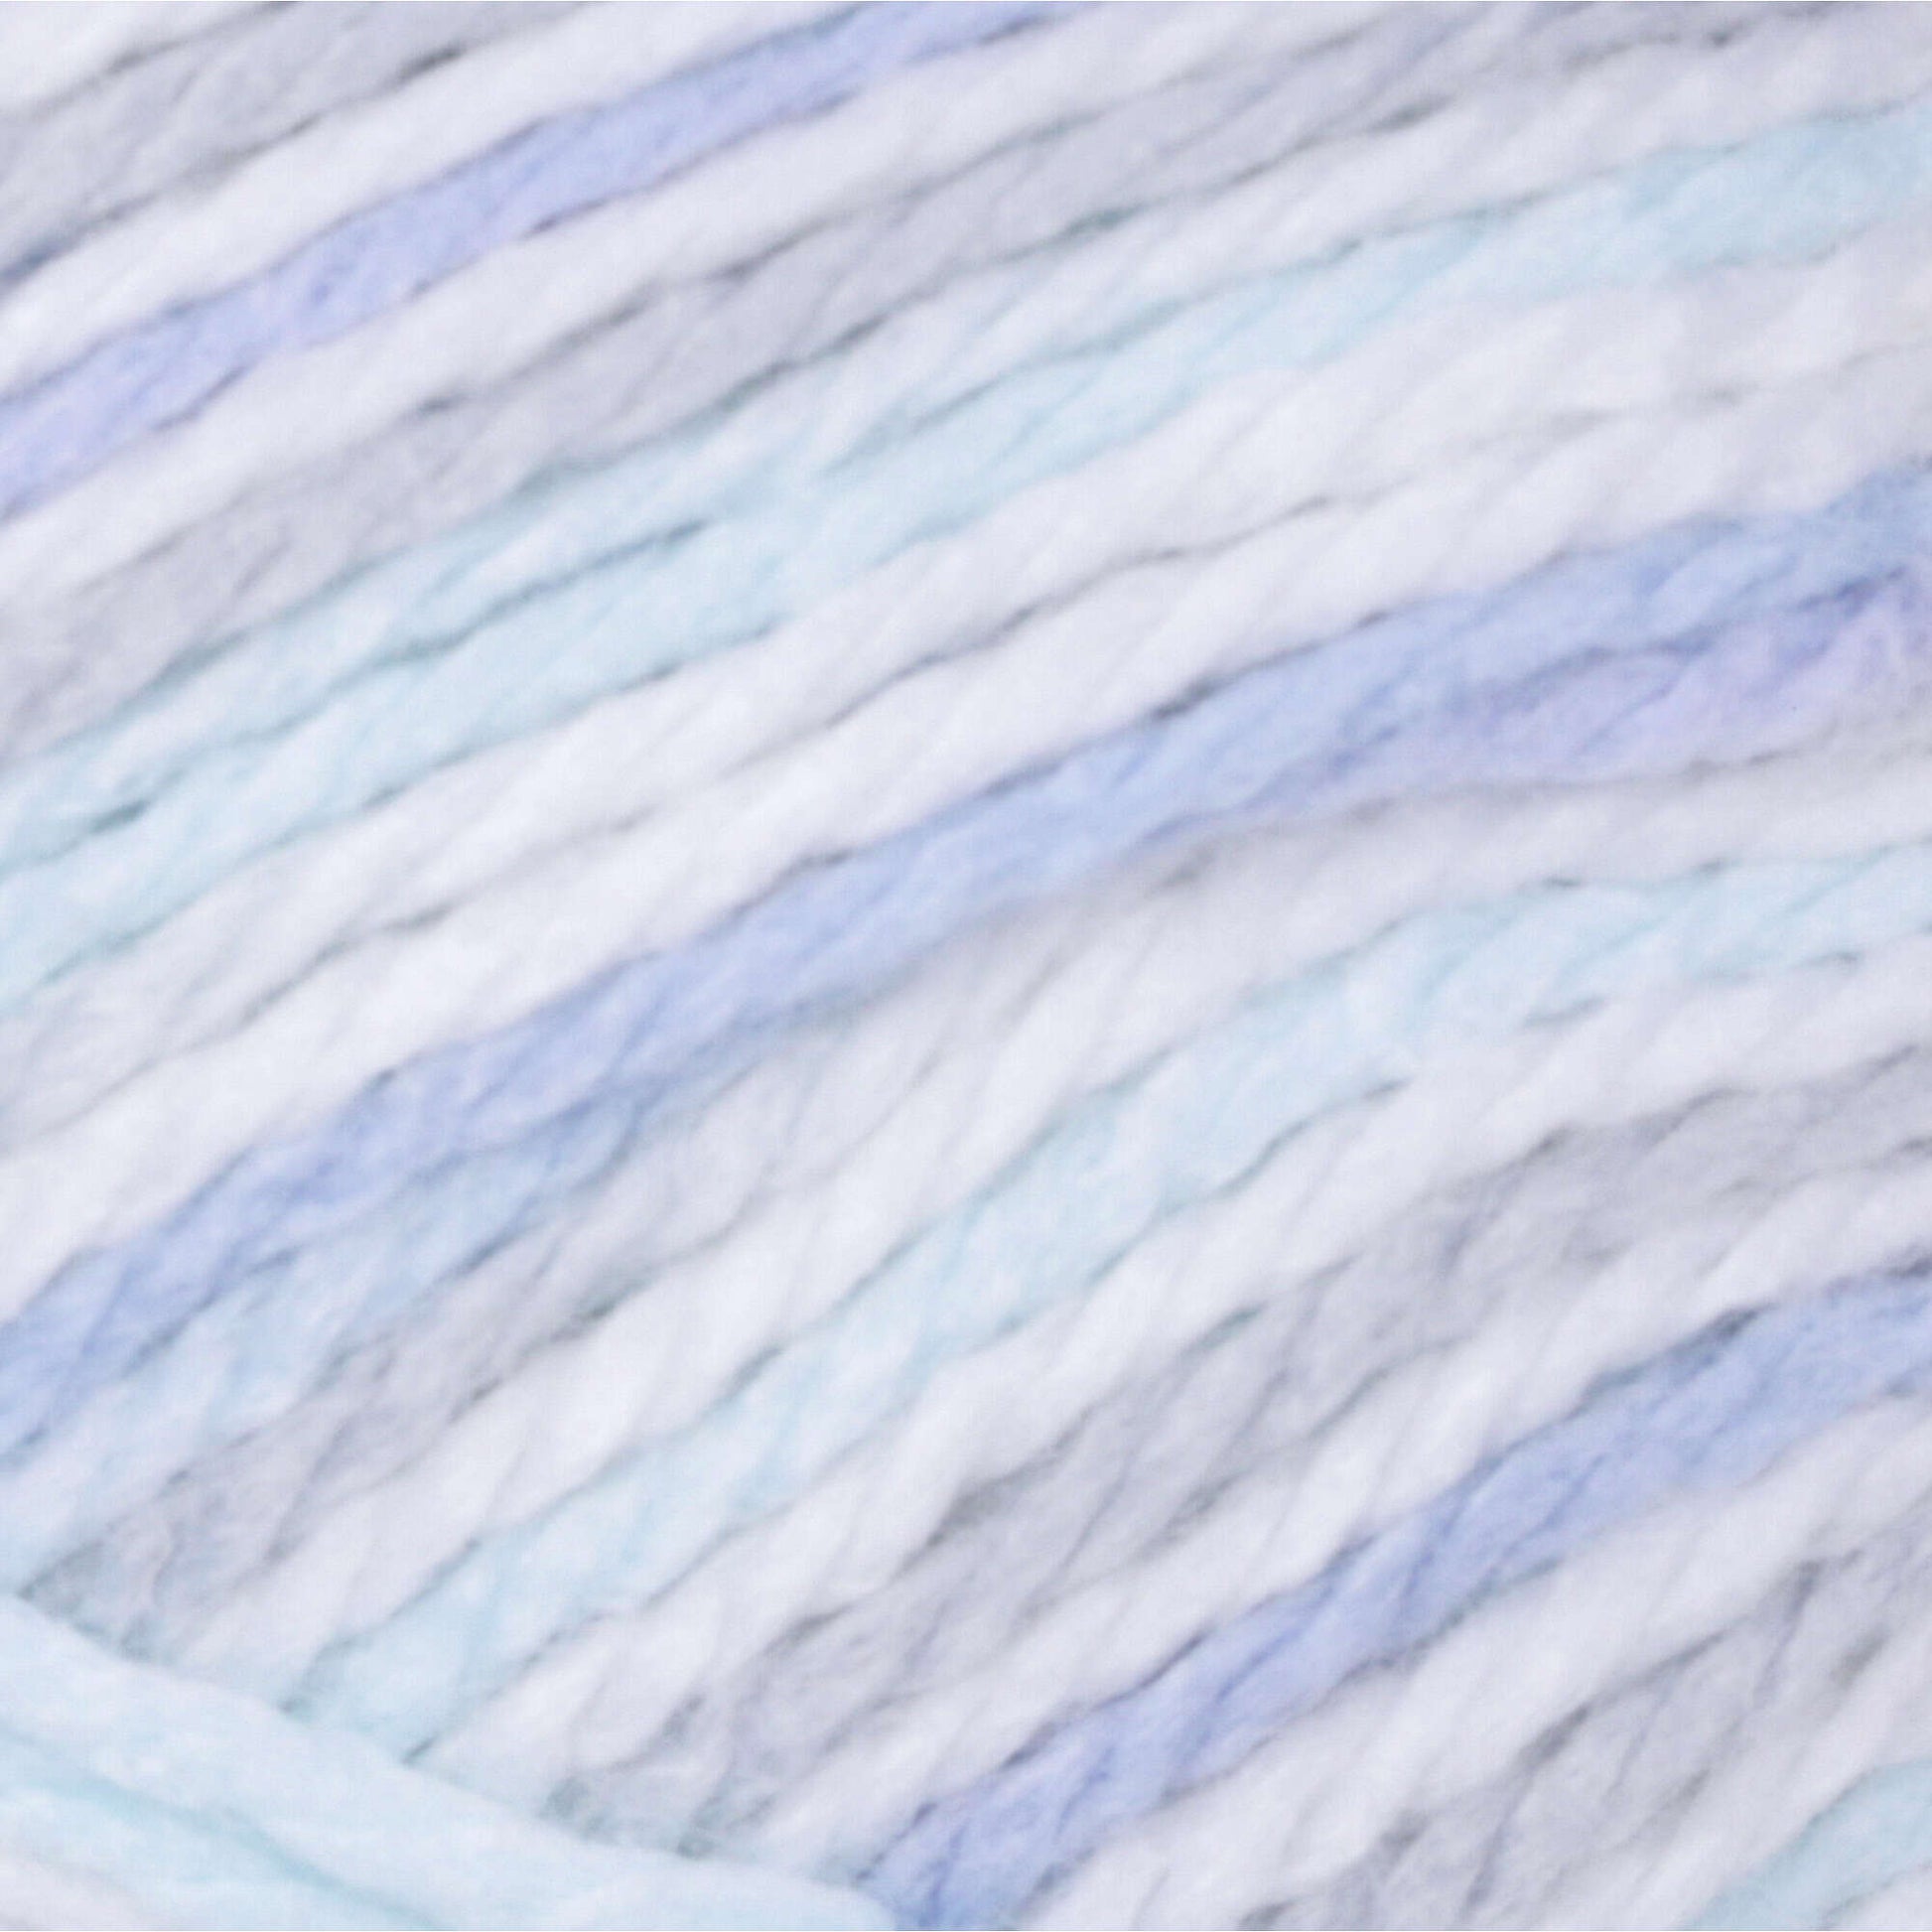 Bernat Softee Baby Variegates Yarn Blue Flannel